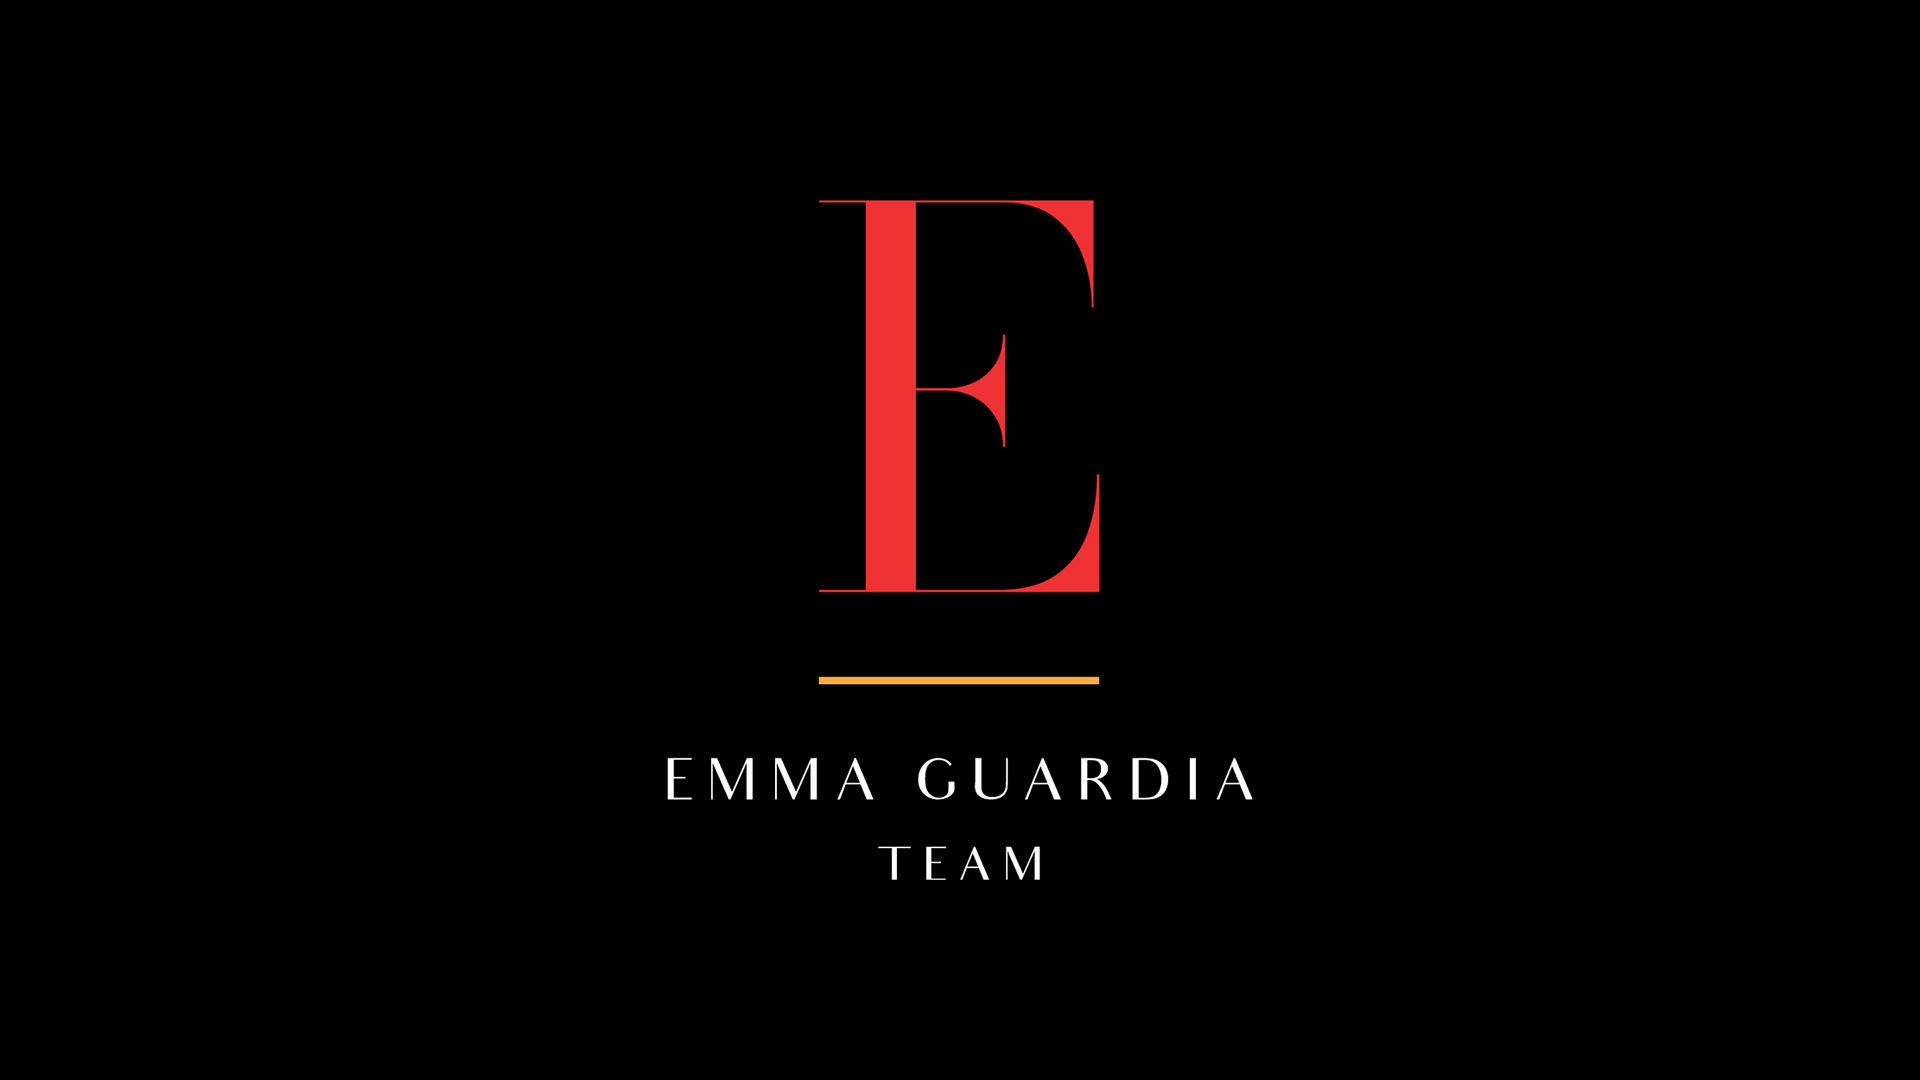 emma guardia logo with names